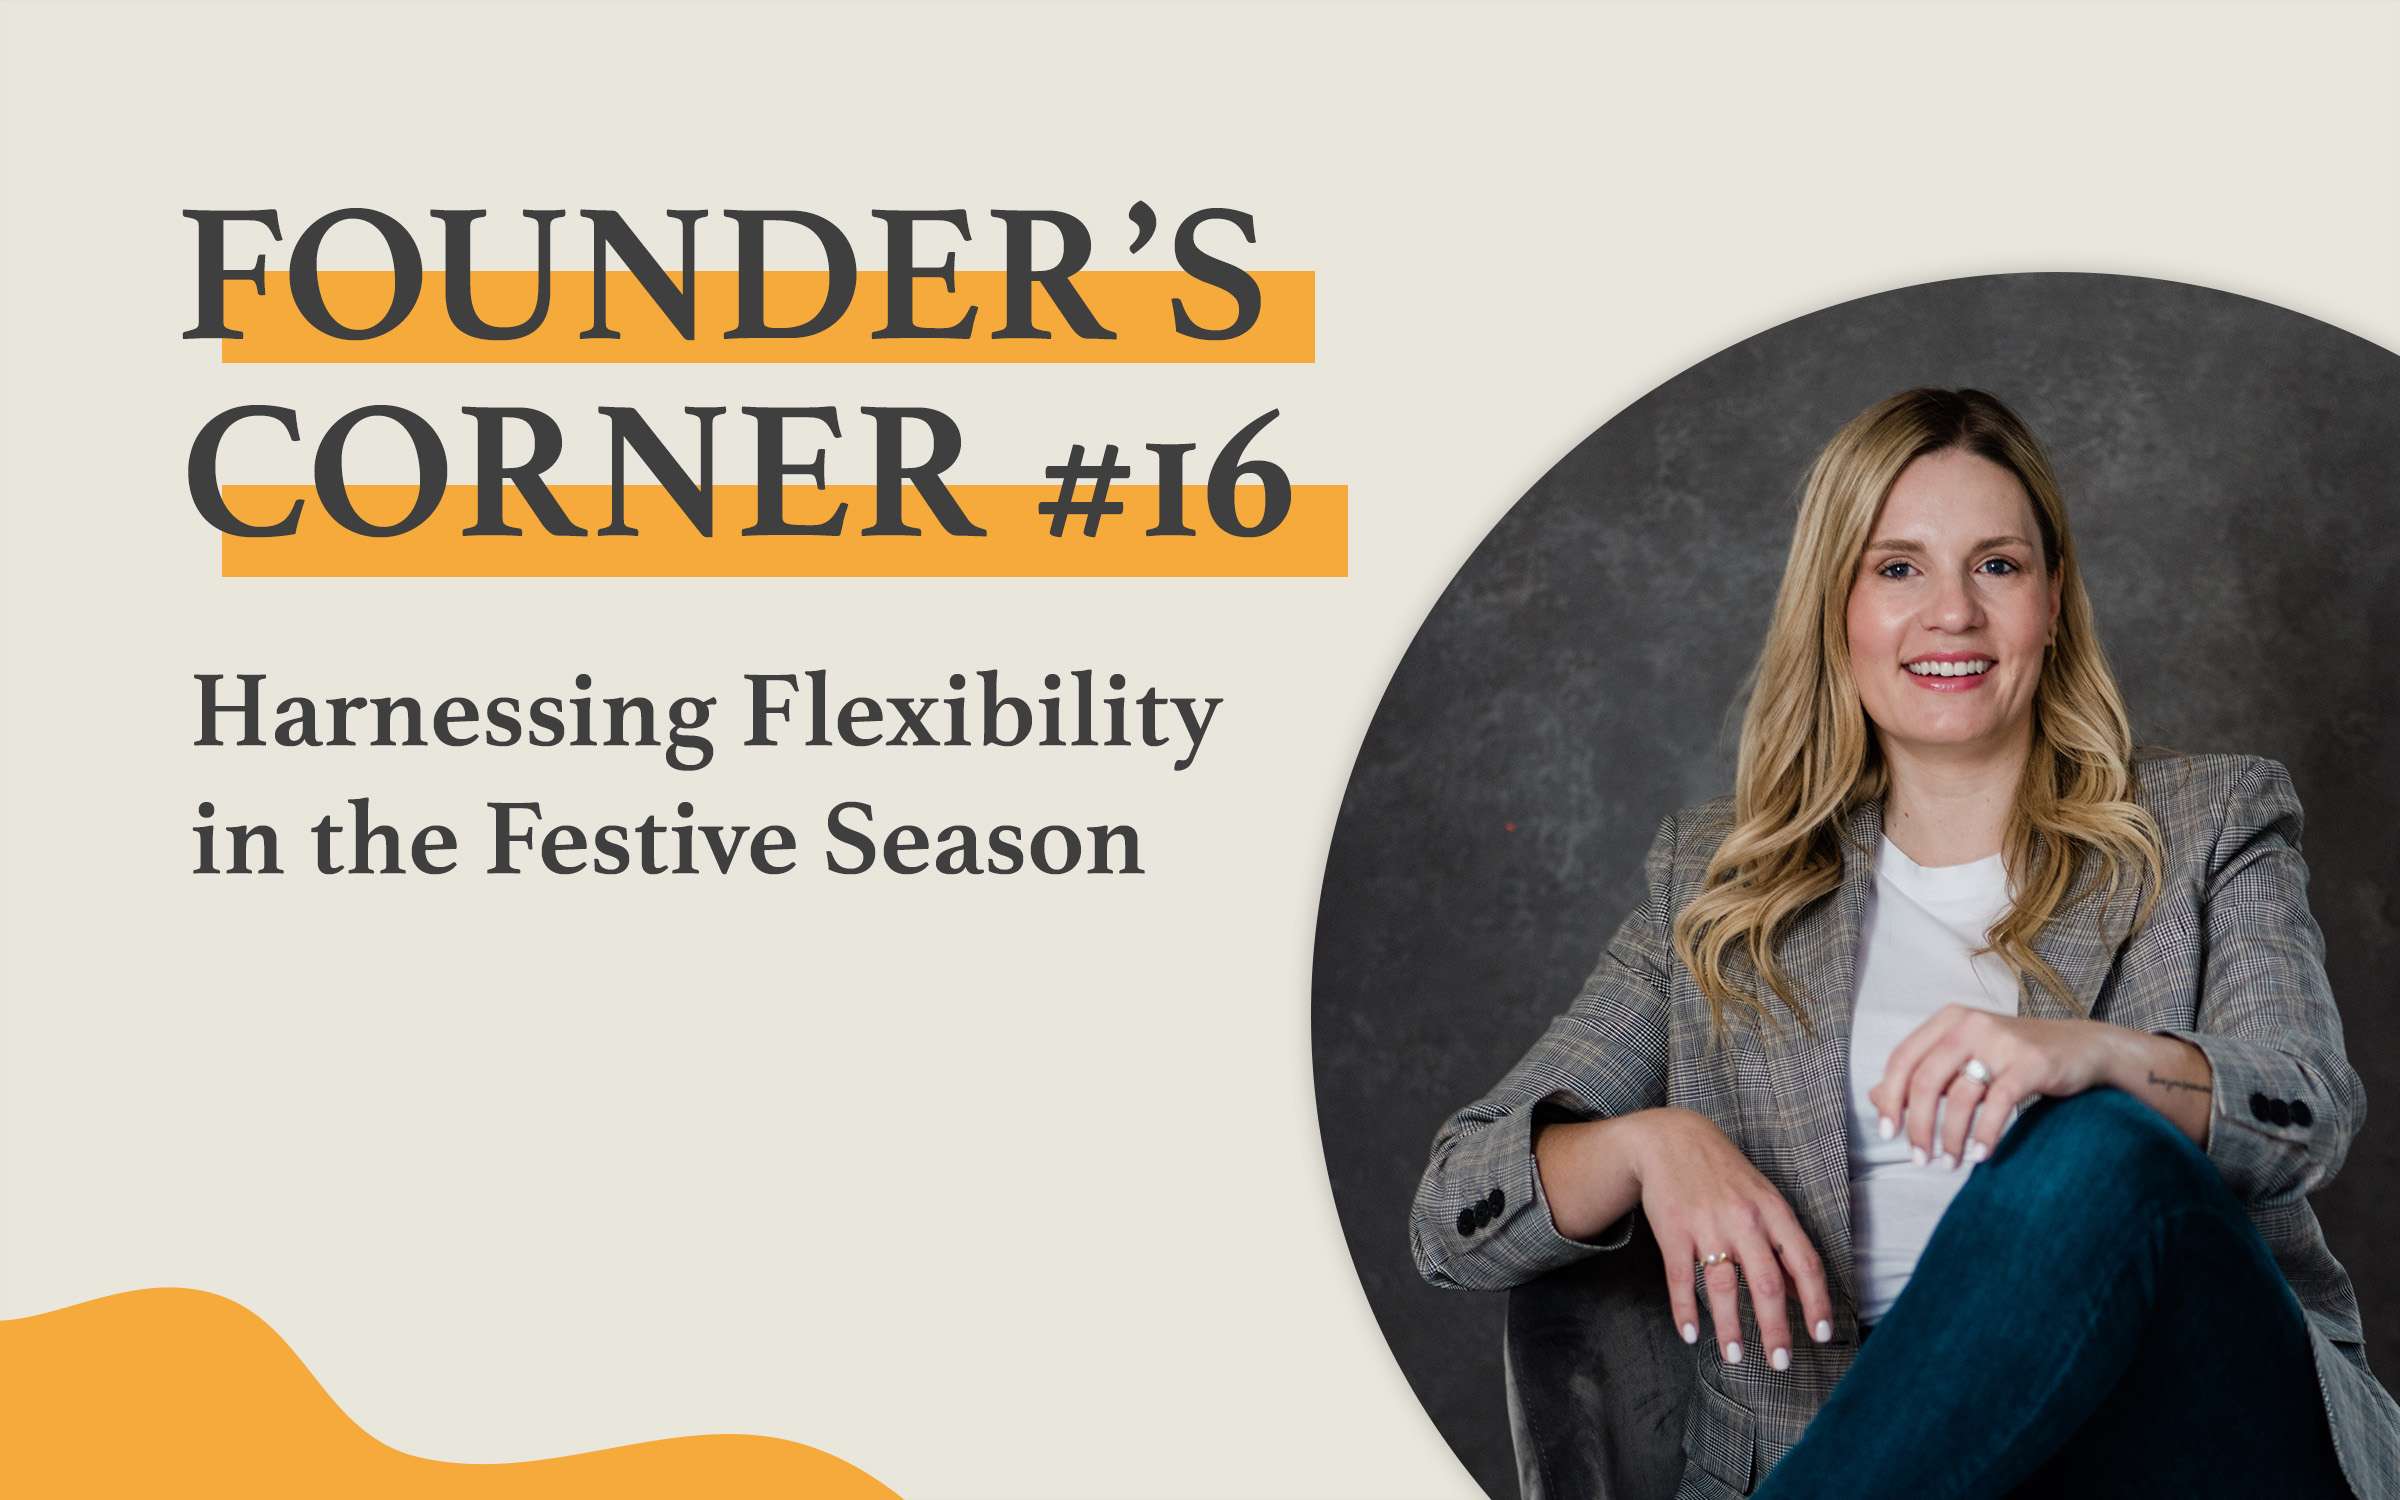 Founder's Corner #16 Harnessing Flexibility in the Festive Season